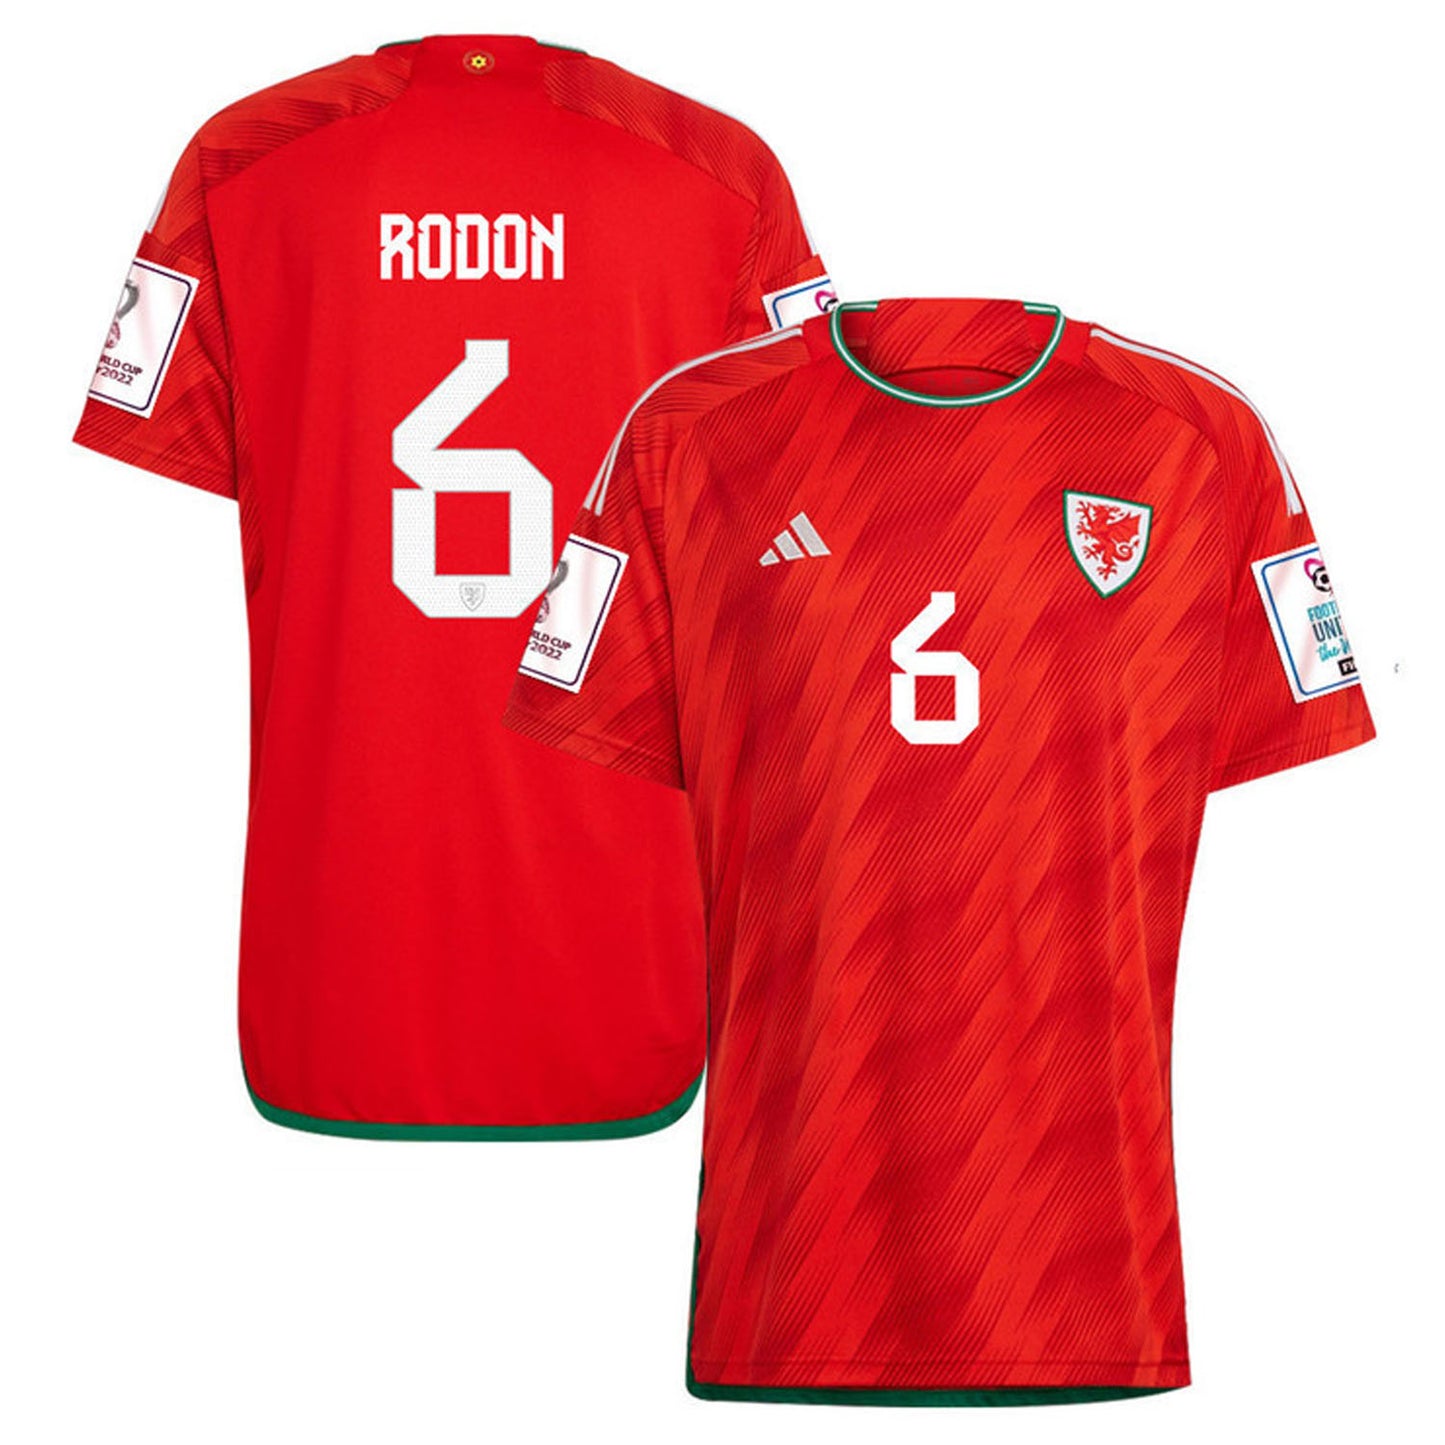 Joe Rodon Wales 6 Fifa World Cup Jersey